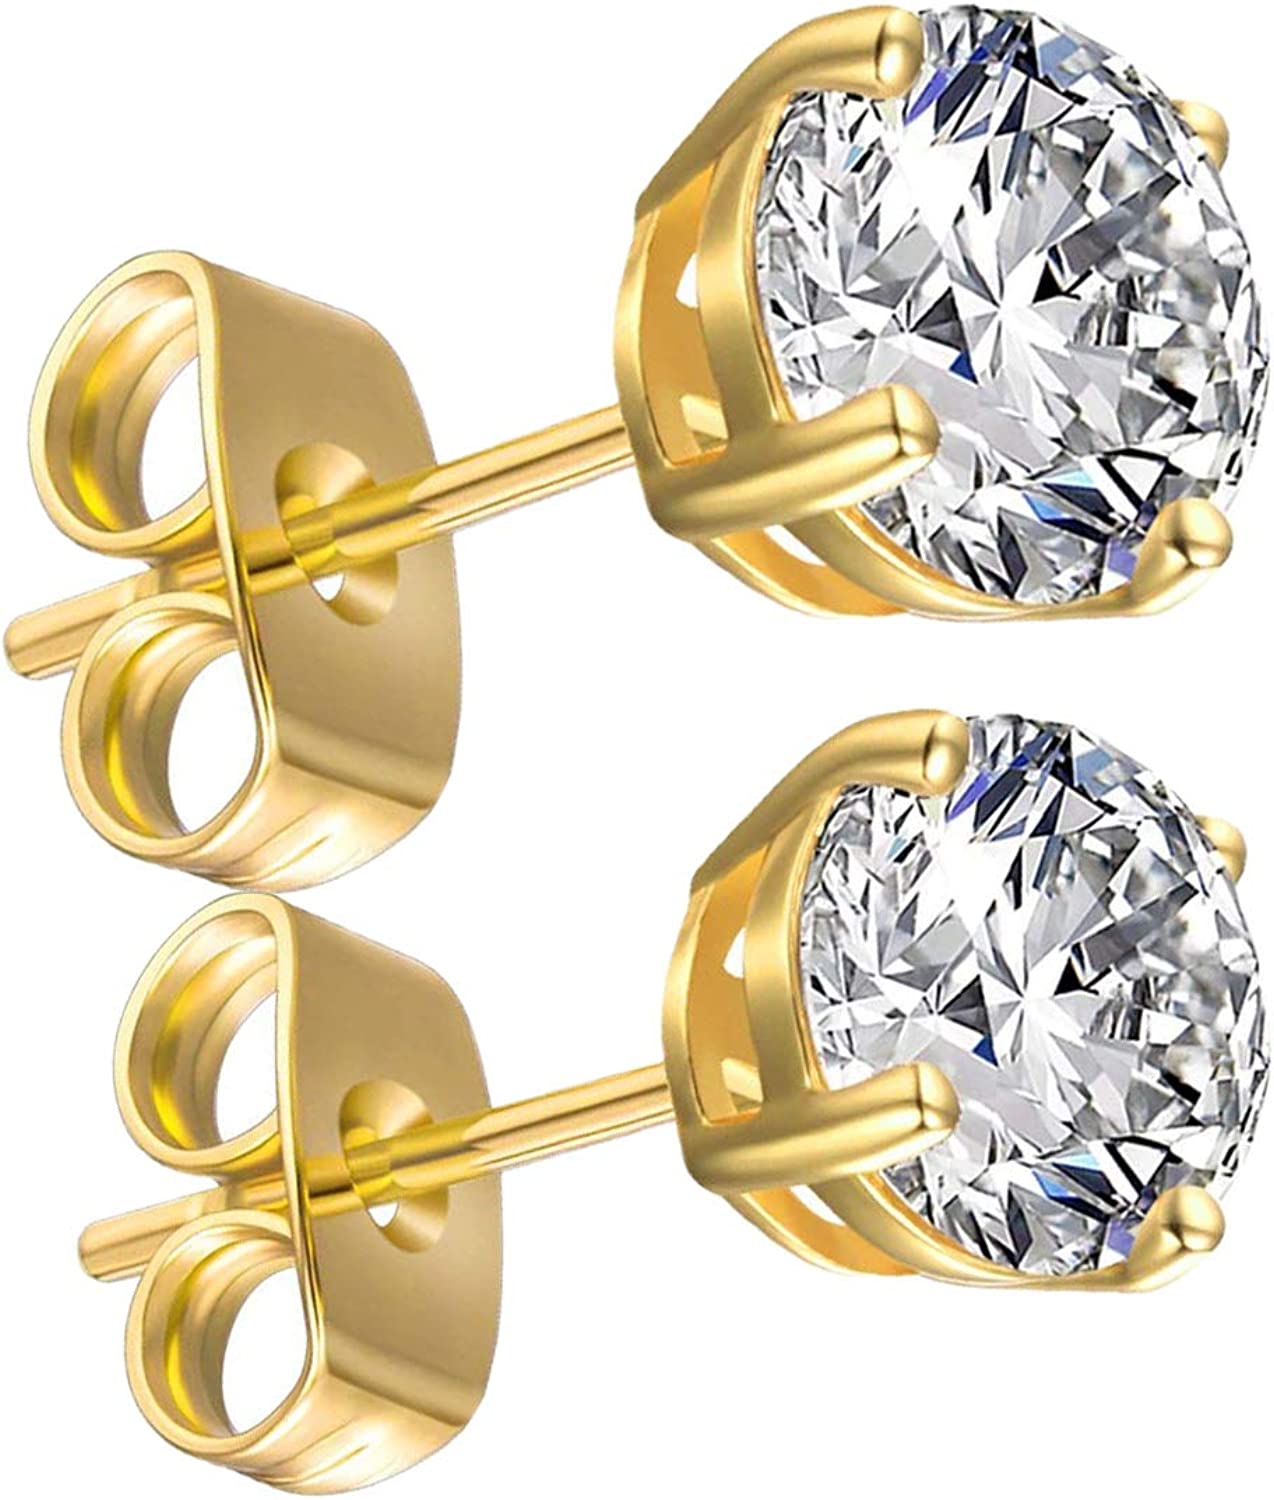 18K White Gold Plated Hypoallergenic CZ Studs Earrings, 925 Sterling Silver Cubic Zirconia Earrings, Simulated Diamond Stud Earrings Jewellery for Her Women